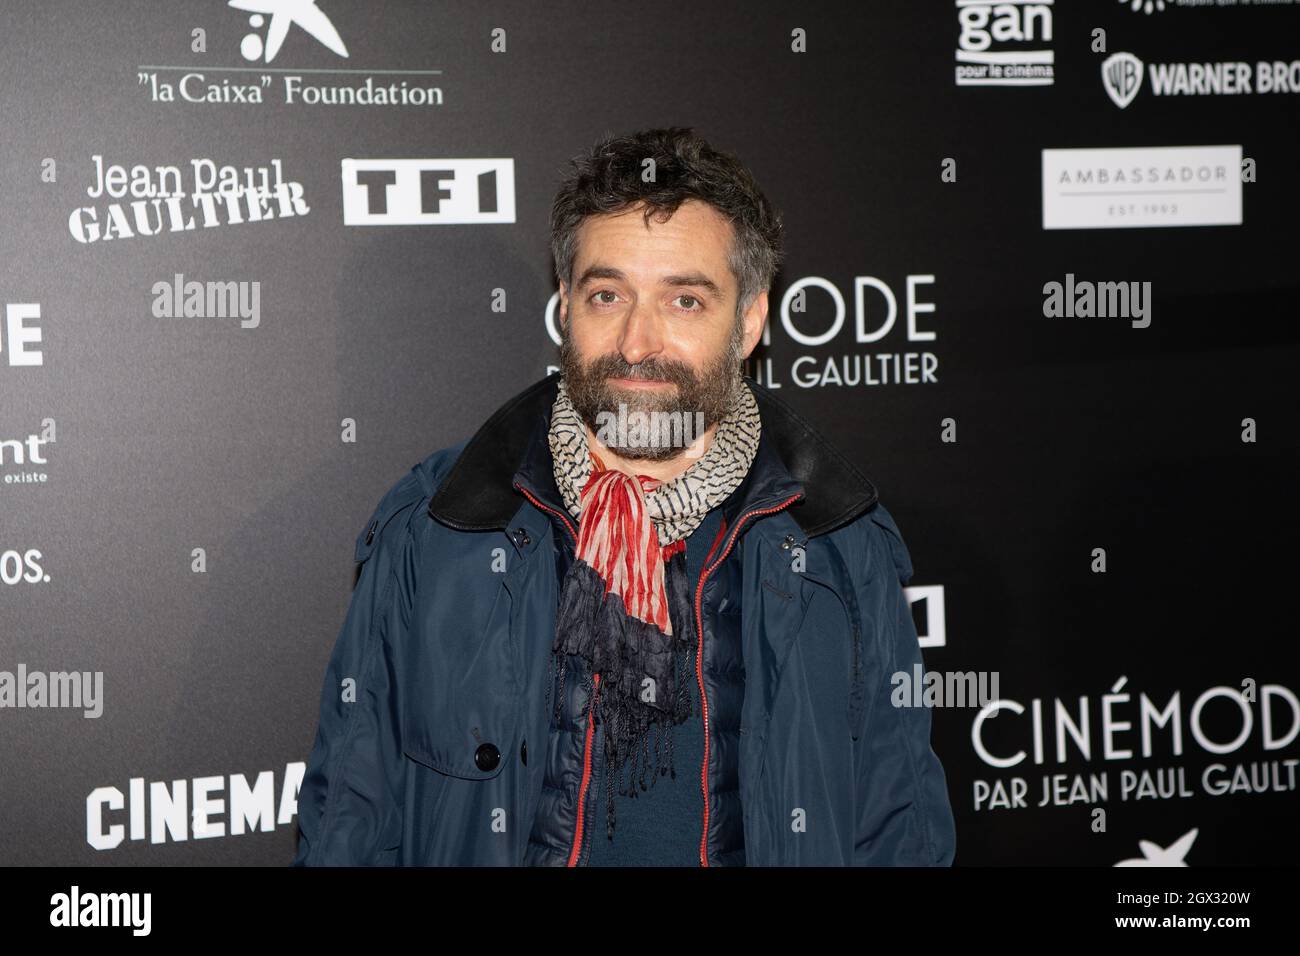 Paris, France, the 3 October, Cinemode, JP Gaultier’s exhibition, Mathieu Demy, François Loock/alamy Credit: Loock françois/Alamy Live News Stock Photo